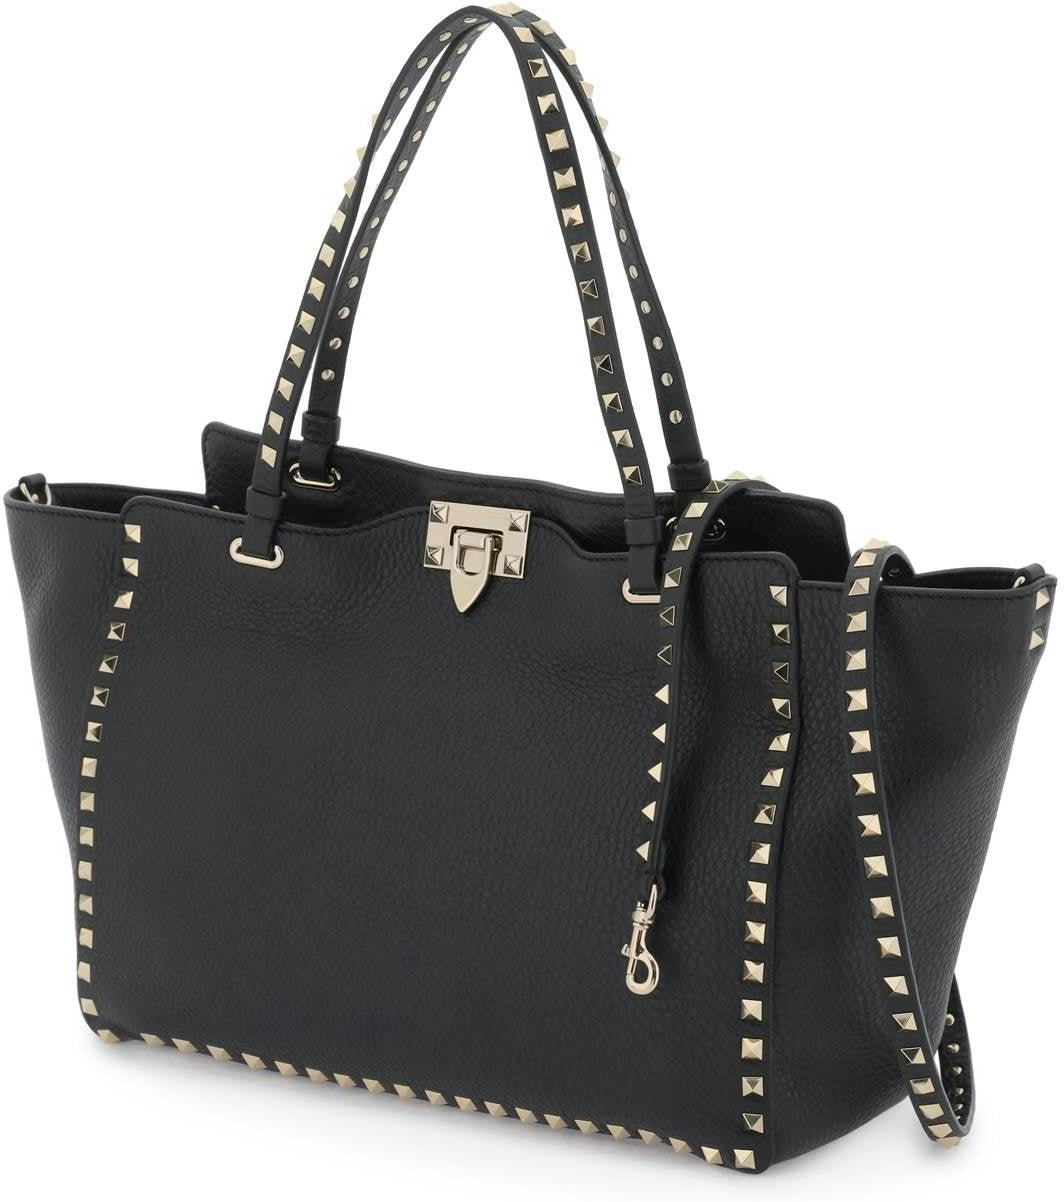 VALENTINO GARAVANI: Rockstud bag in leather with studs - Black  Valentino  Garavani shoulder bag 3W2B0970VSF online at